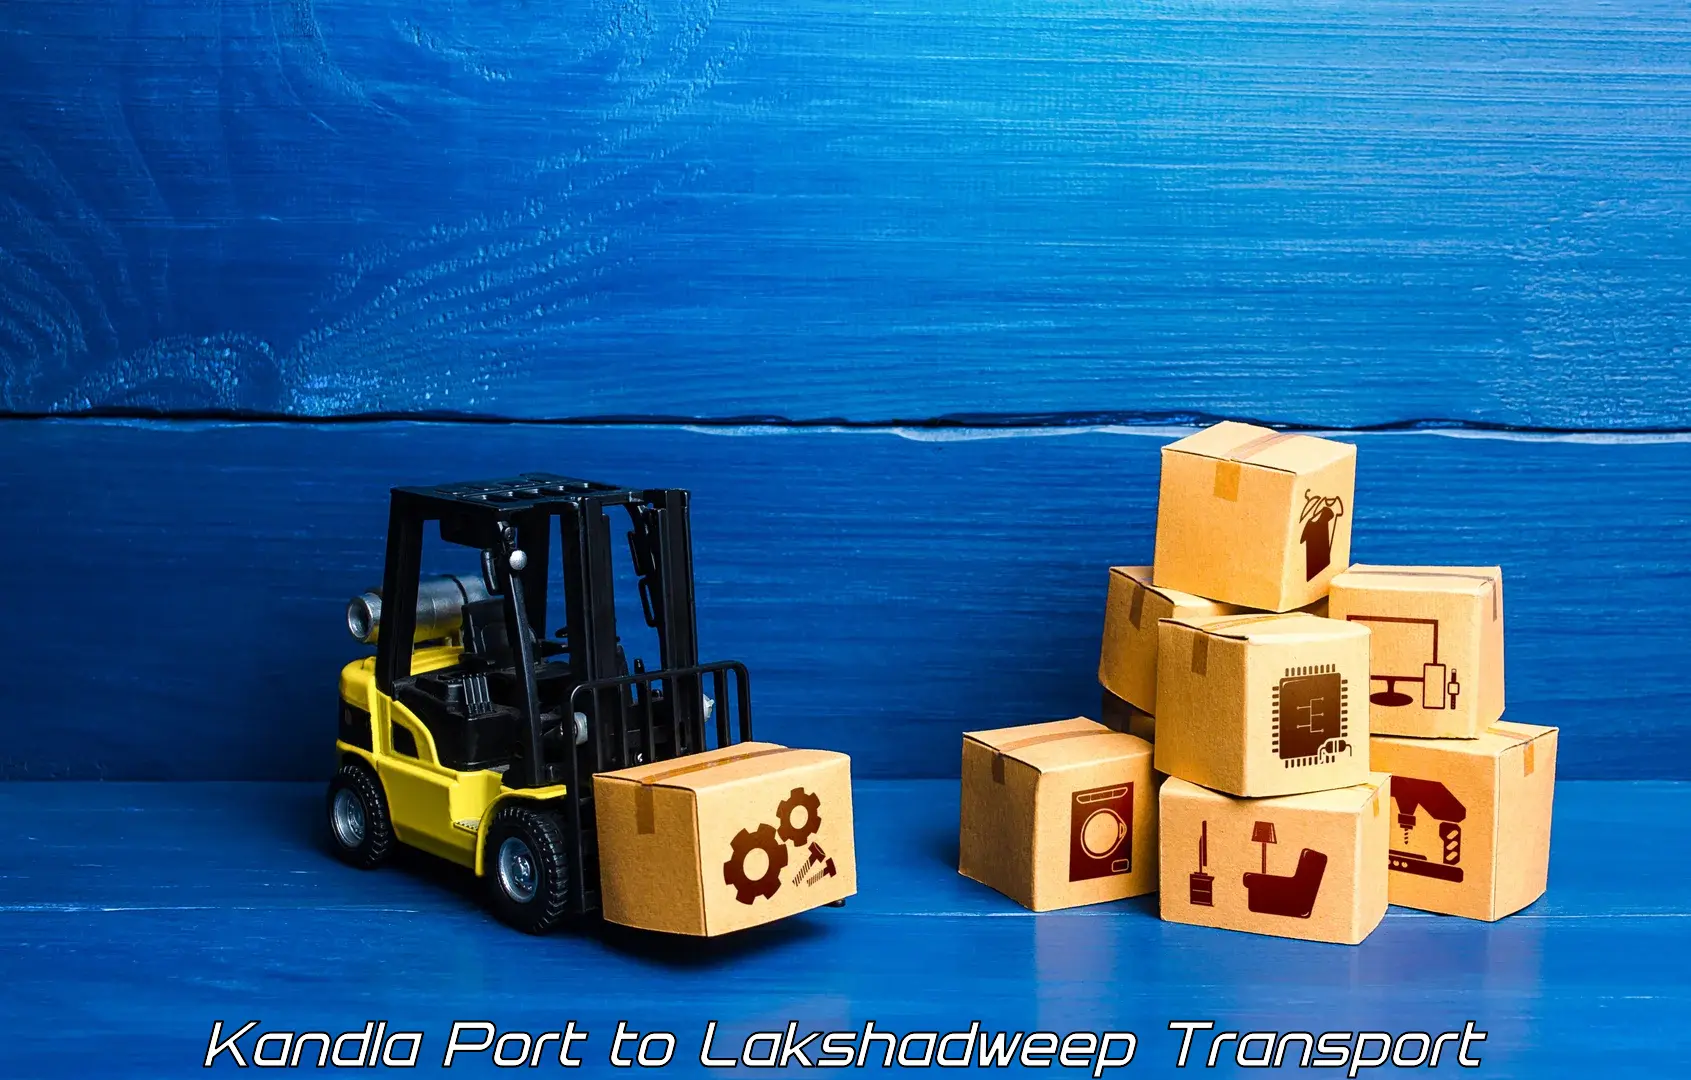 Daily parcel service transport Kandla Port to Lakshadweep